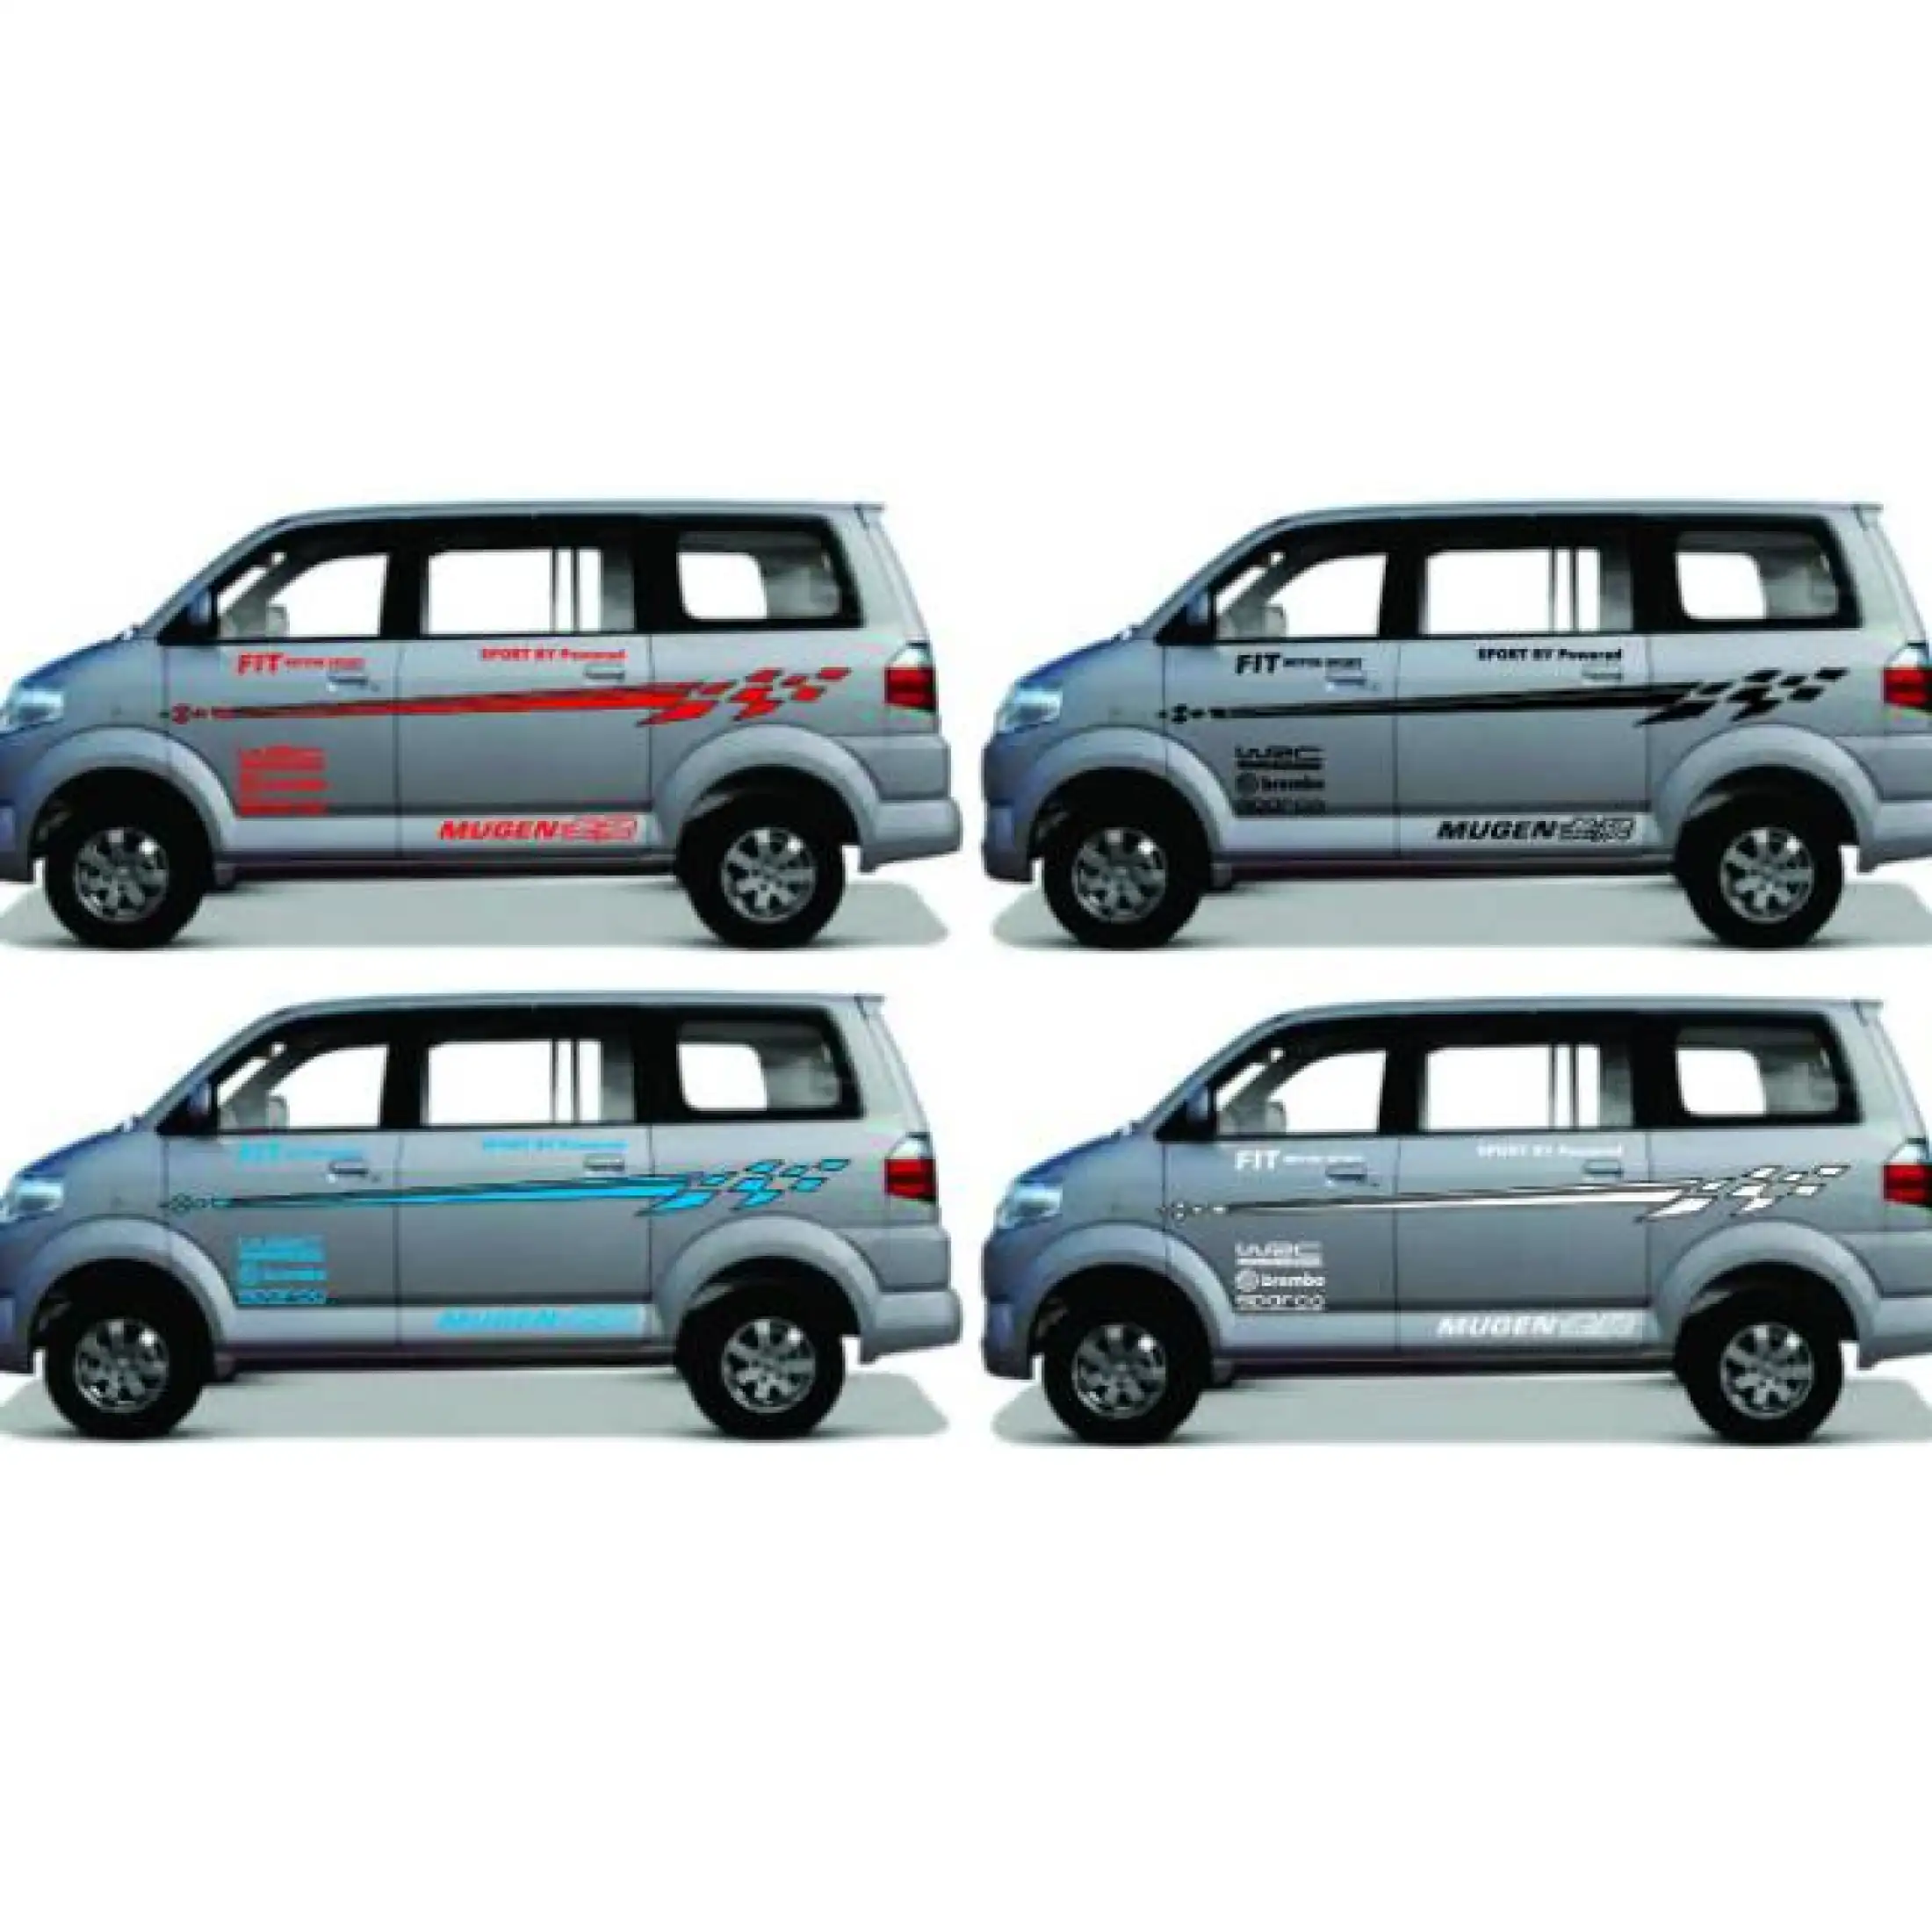 Stiker Mobil Suzuki Apv Terbaru Terlaris Stiker Cutting Mobil Carry Keren Lazada Indonesia